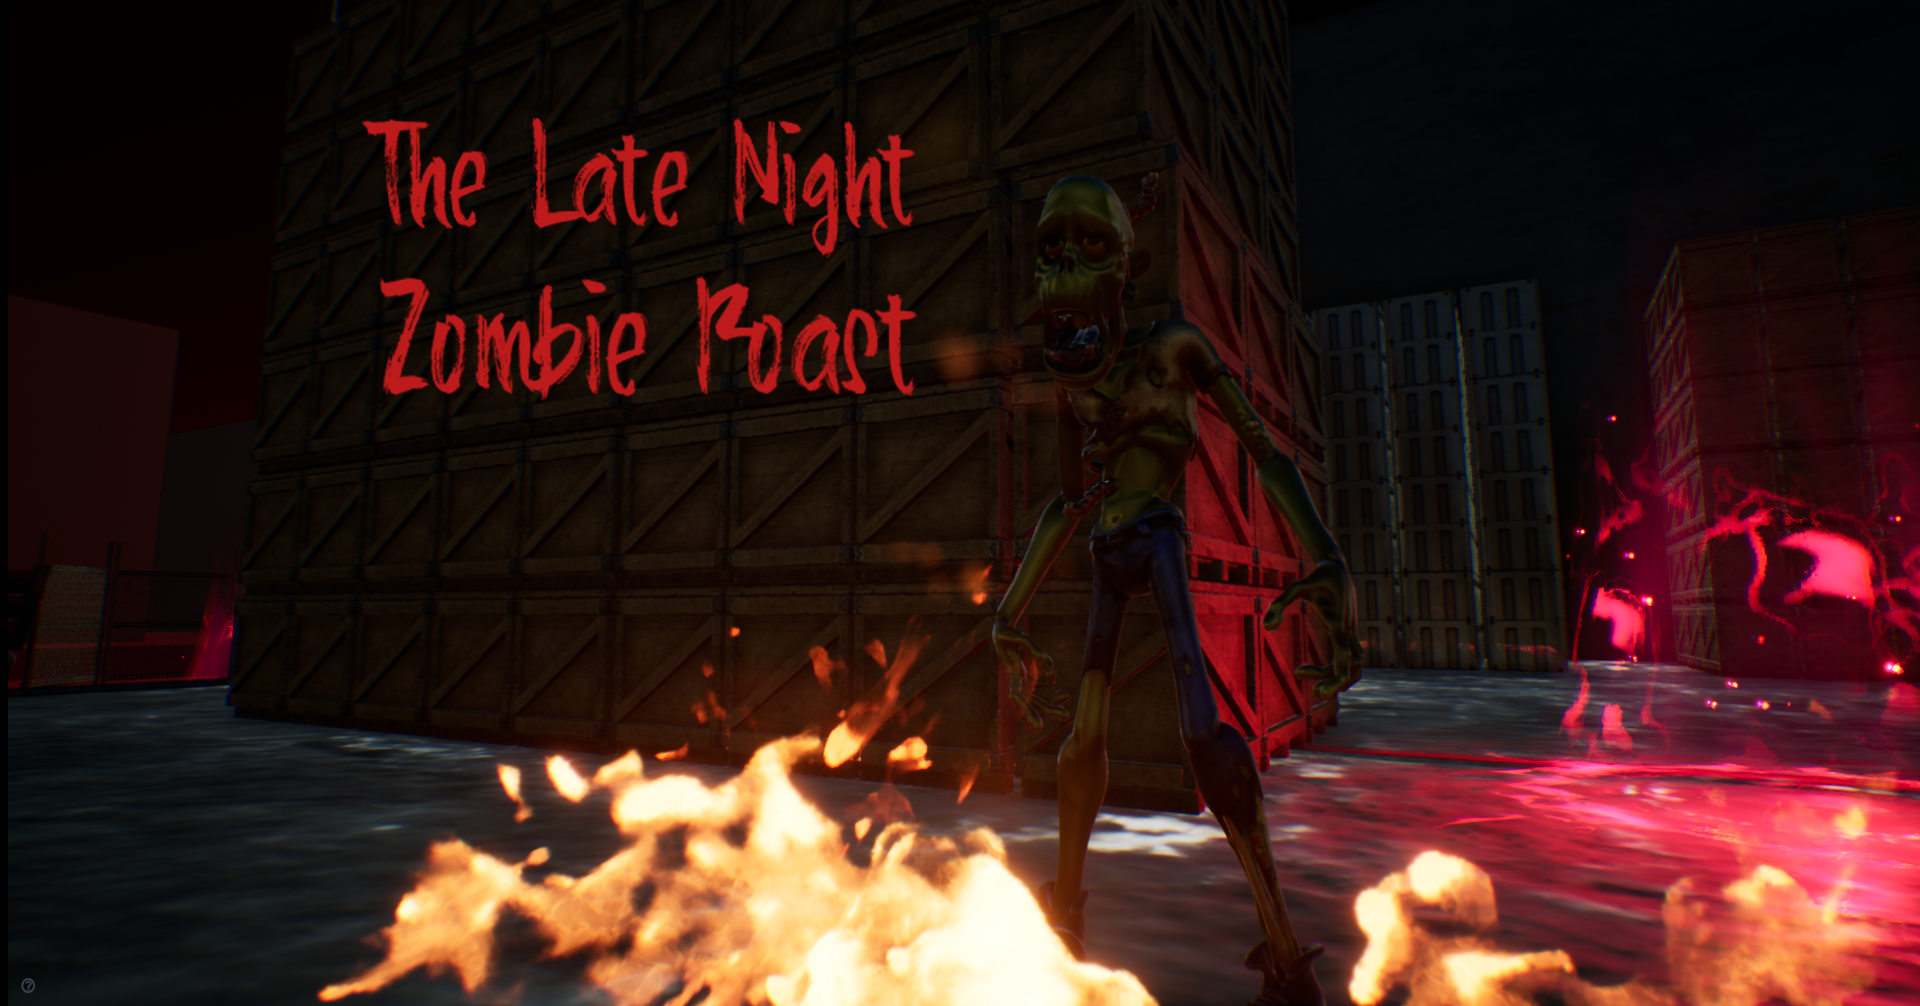 The Late Night Zombie Roast